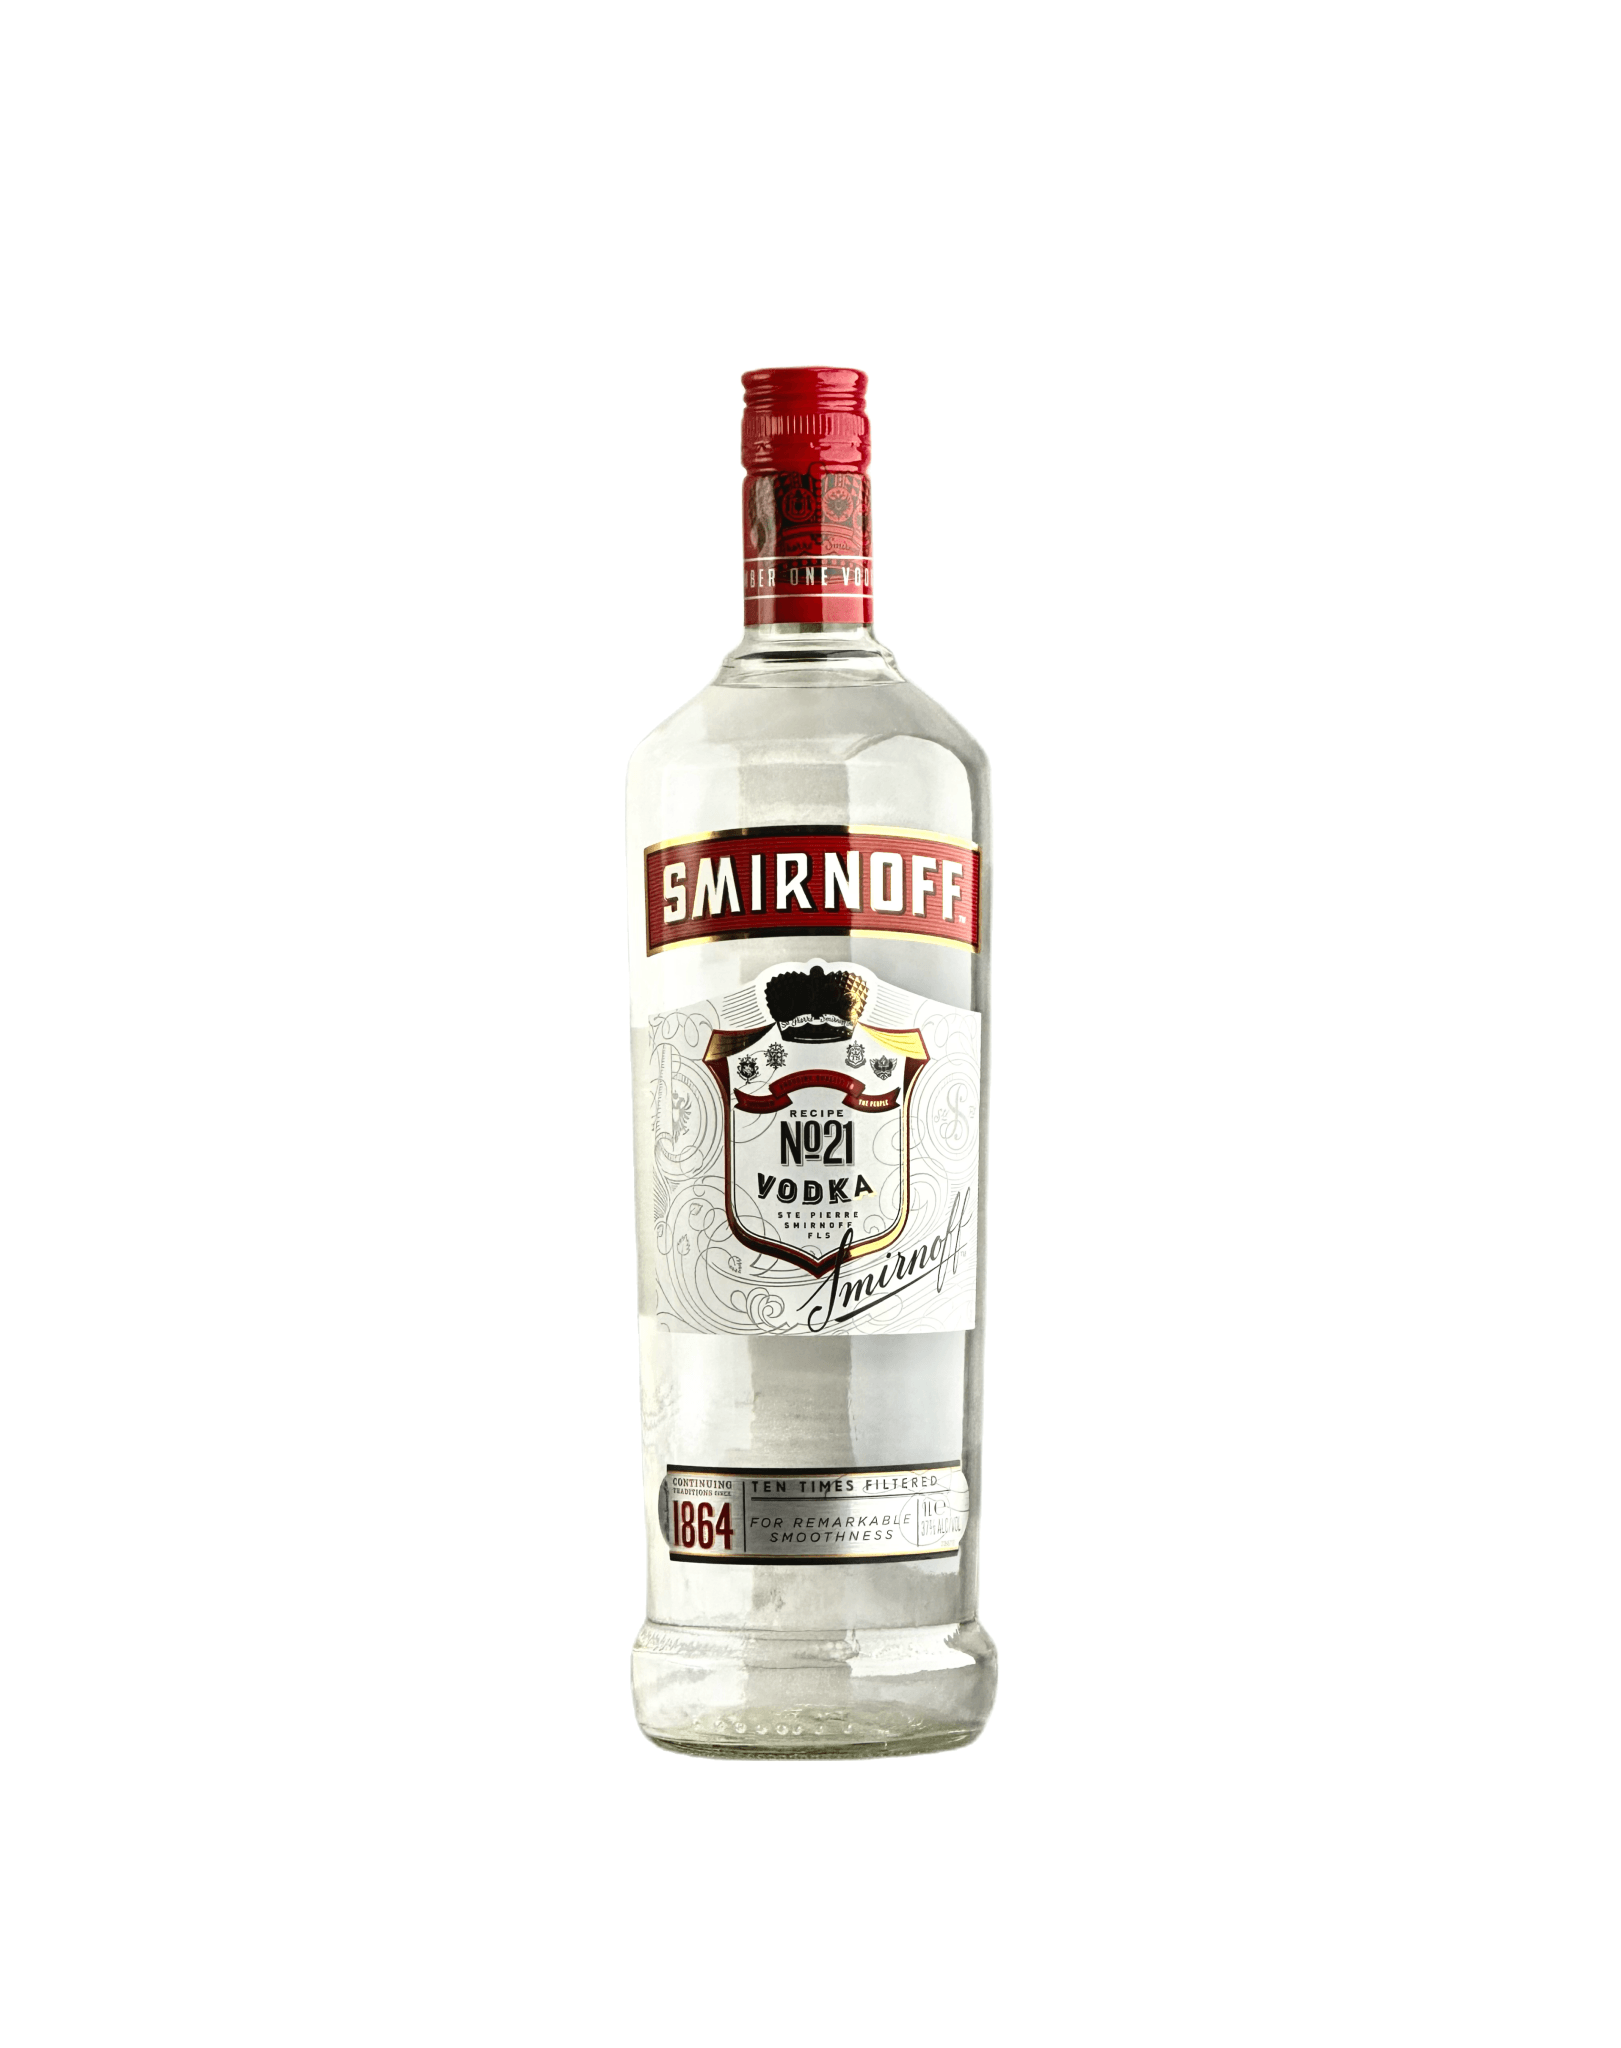 LIQUOR Vodka No 1L Label 21 CG Smirnoff Red |